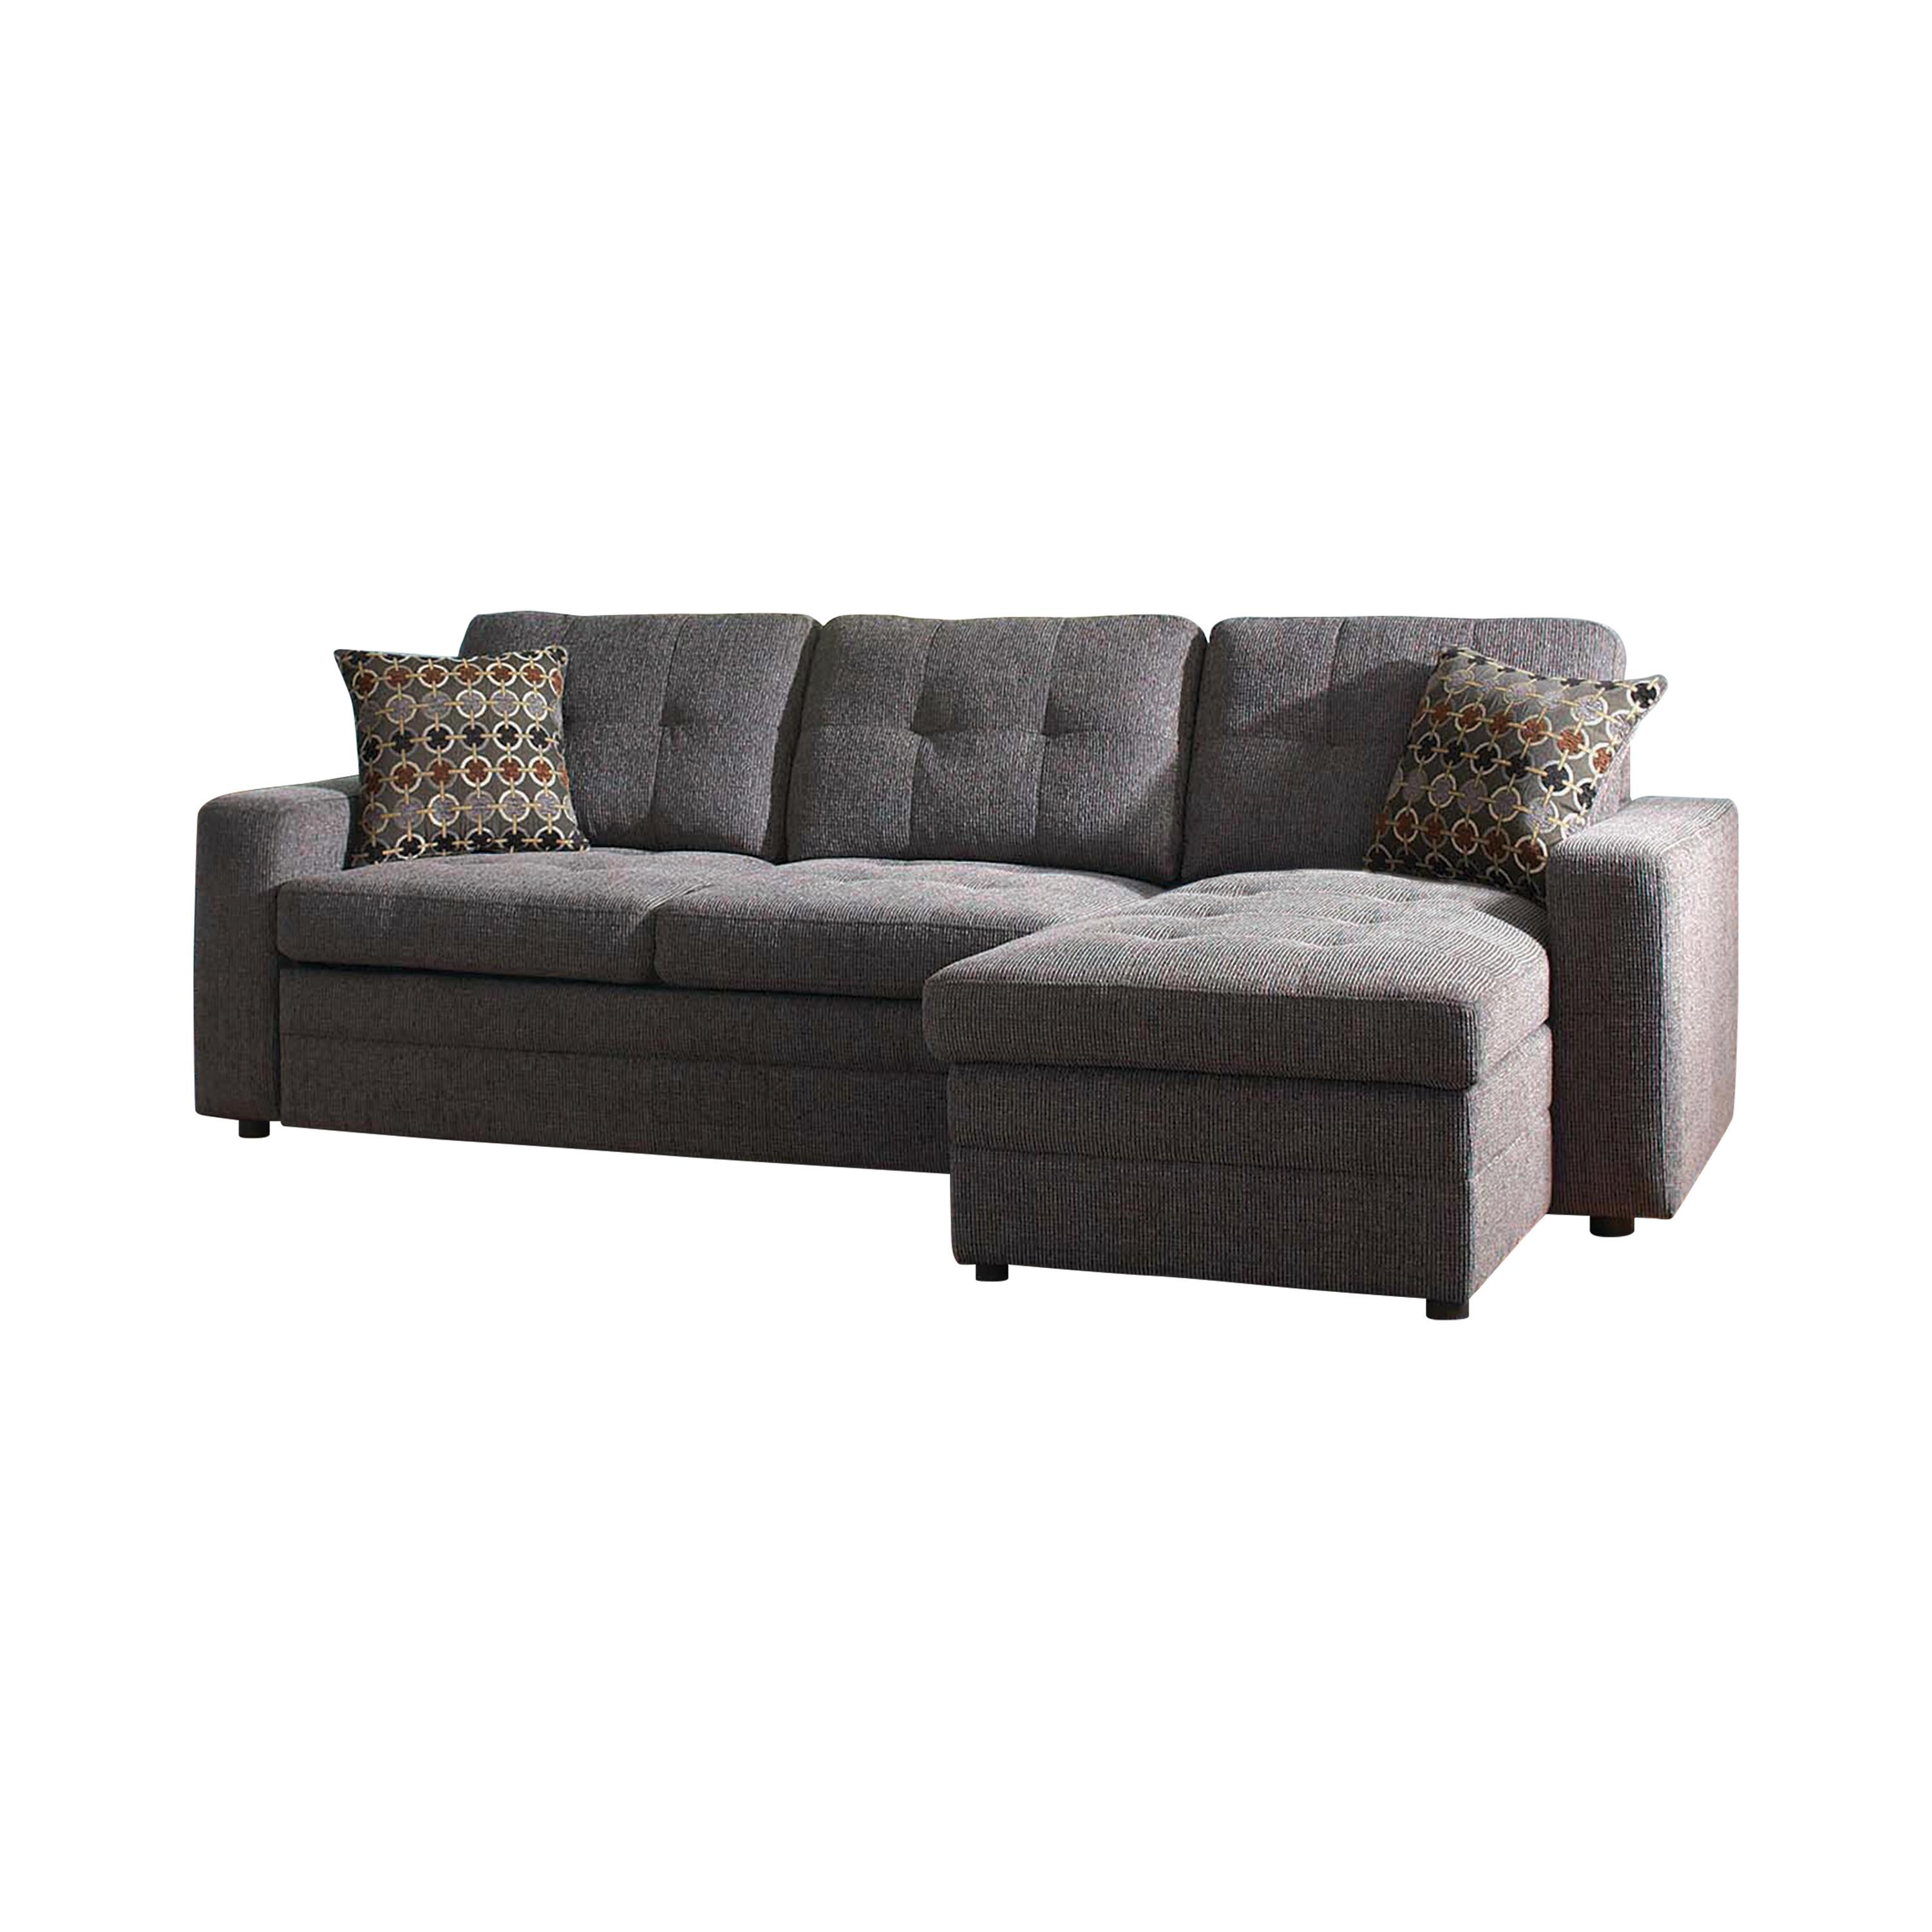 Modern Sleeper Sectional Sofa 501677 Gus 501677 in Charcoal Chenille